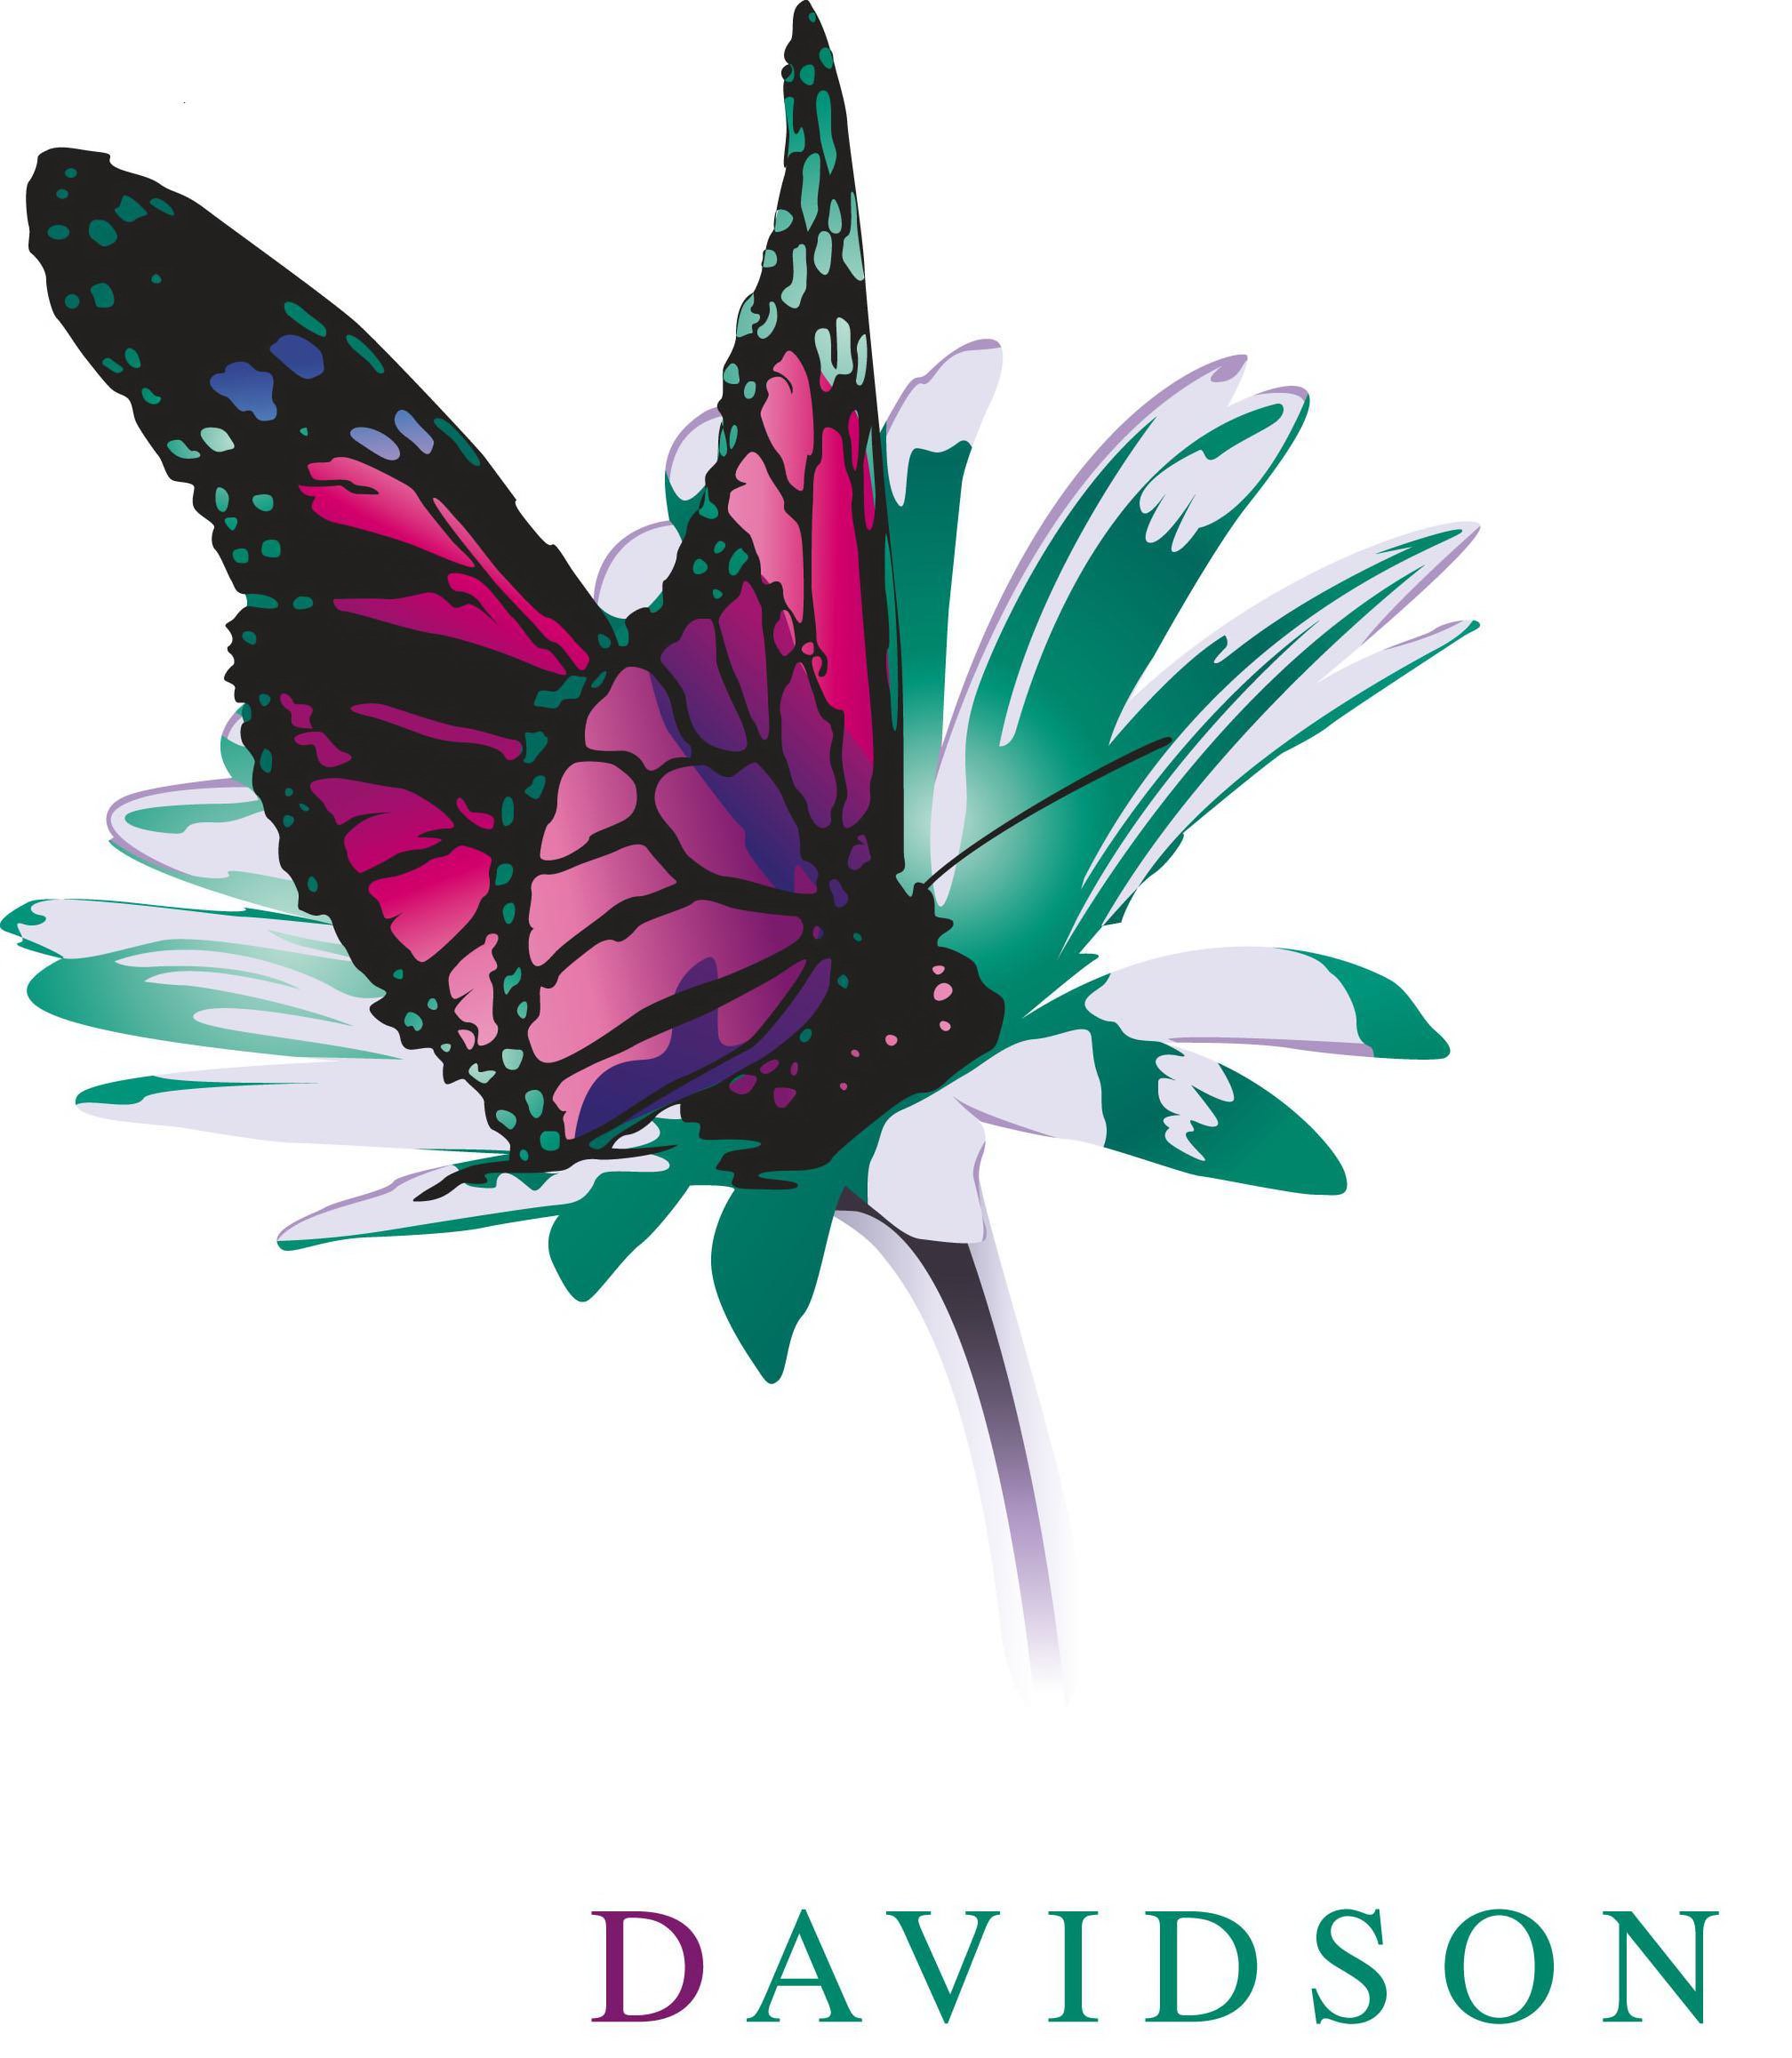 Trademark Logo DAVIDSON